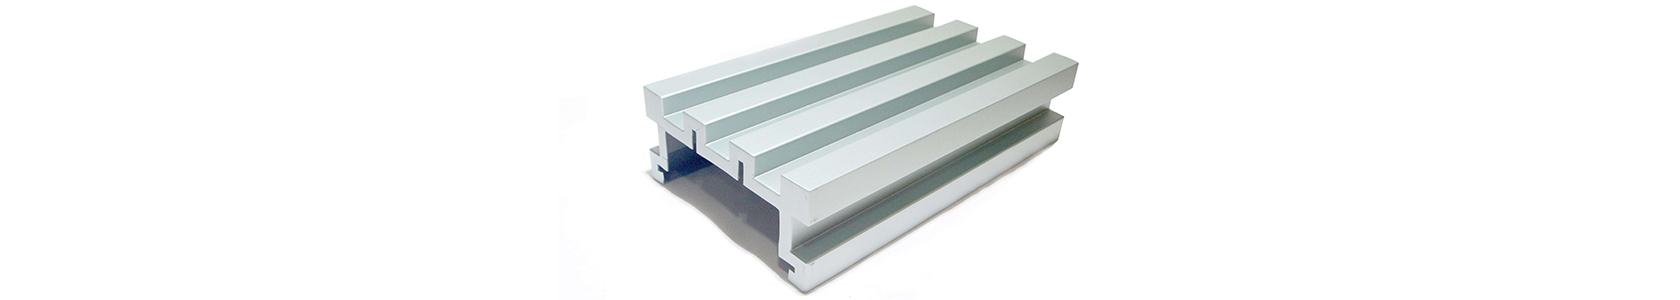 Aluminium Angle Bar(2)